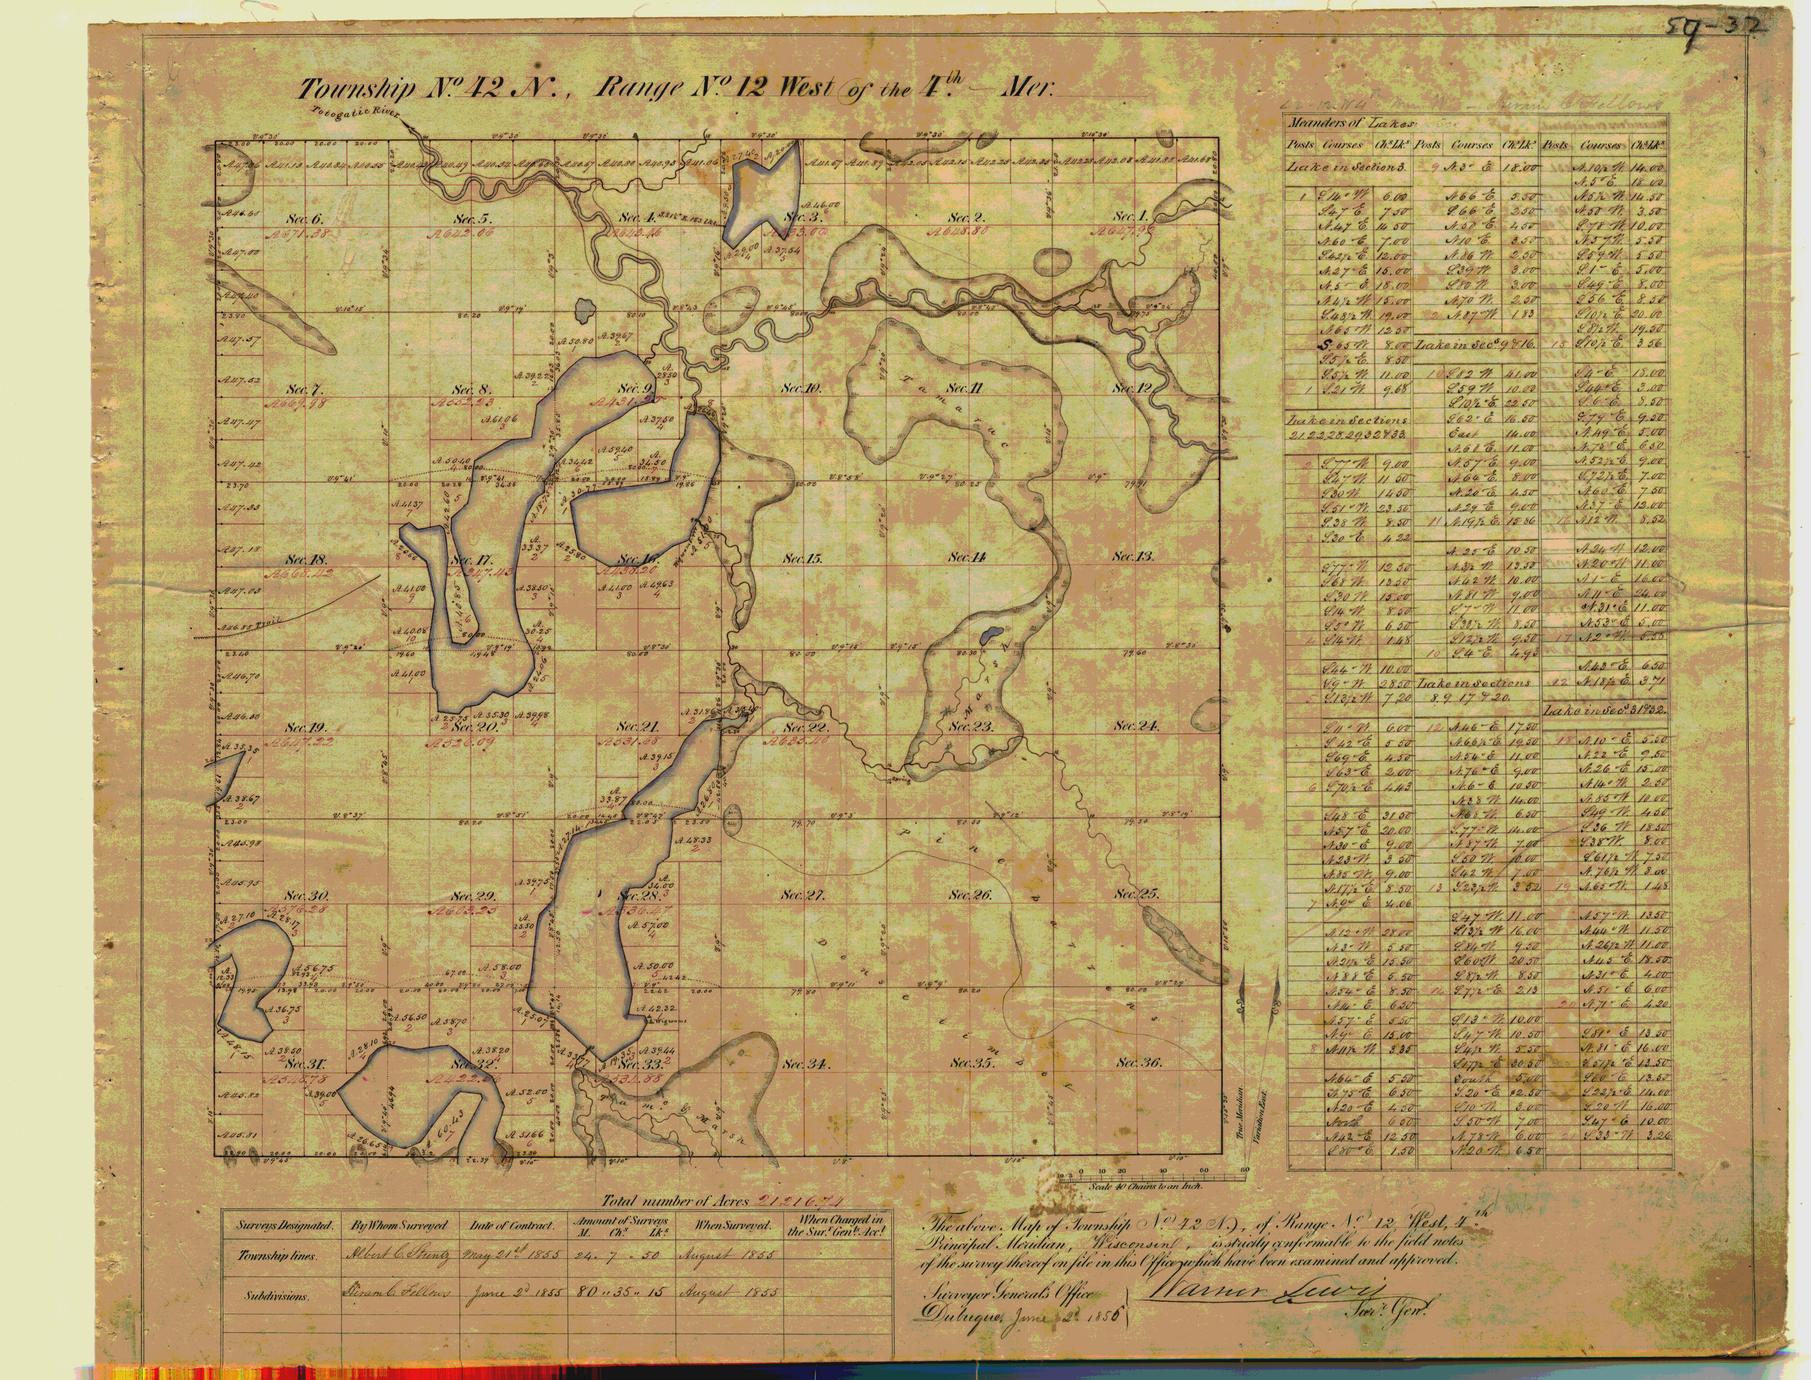 [Public Land Survey System map: Wisconsin Township 42 North, Range 12 West]